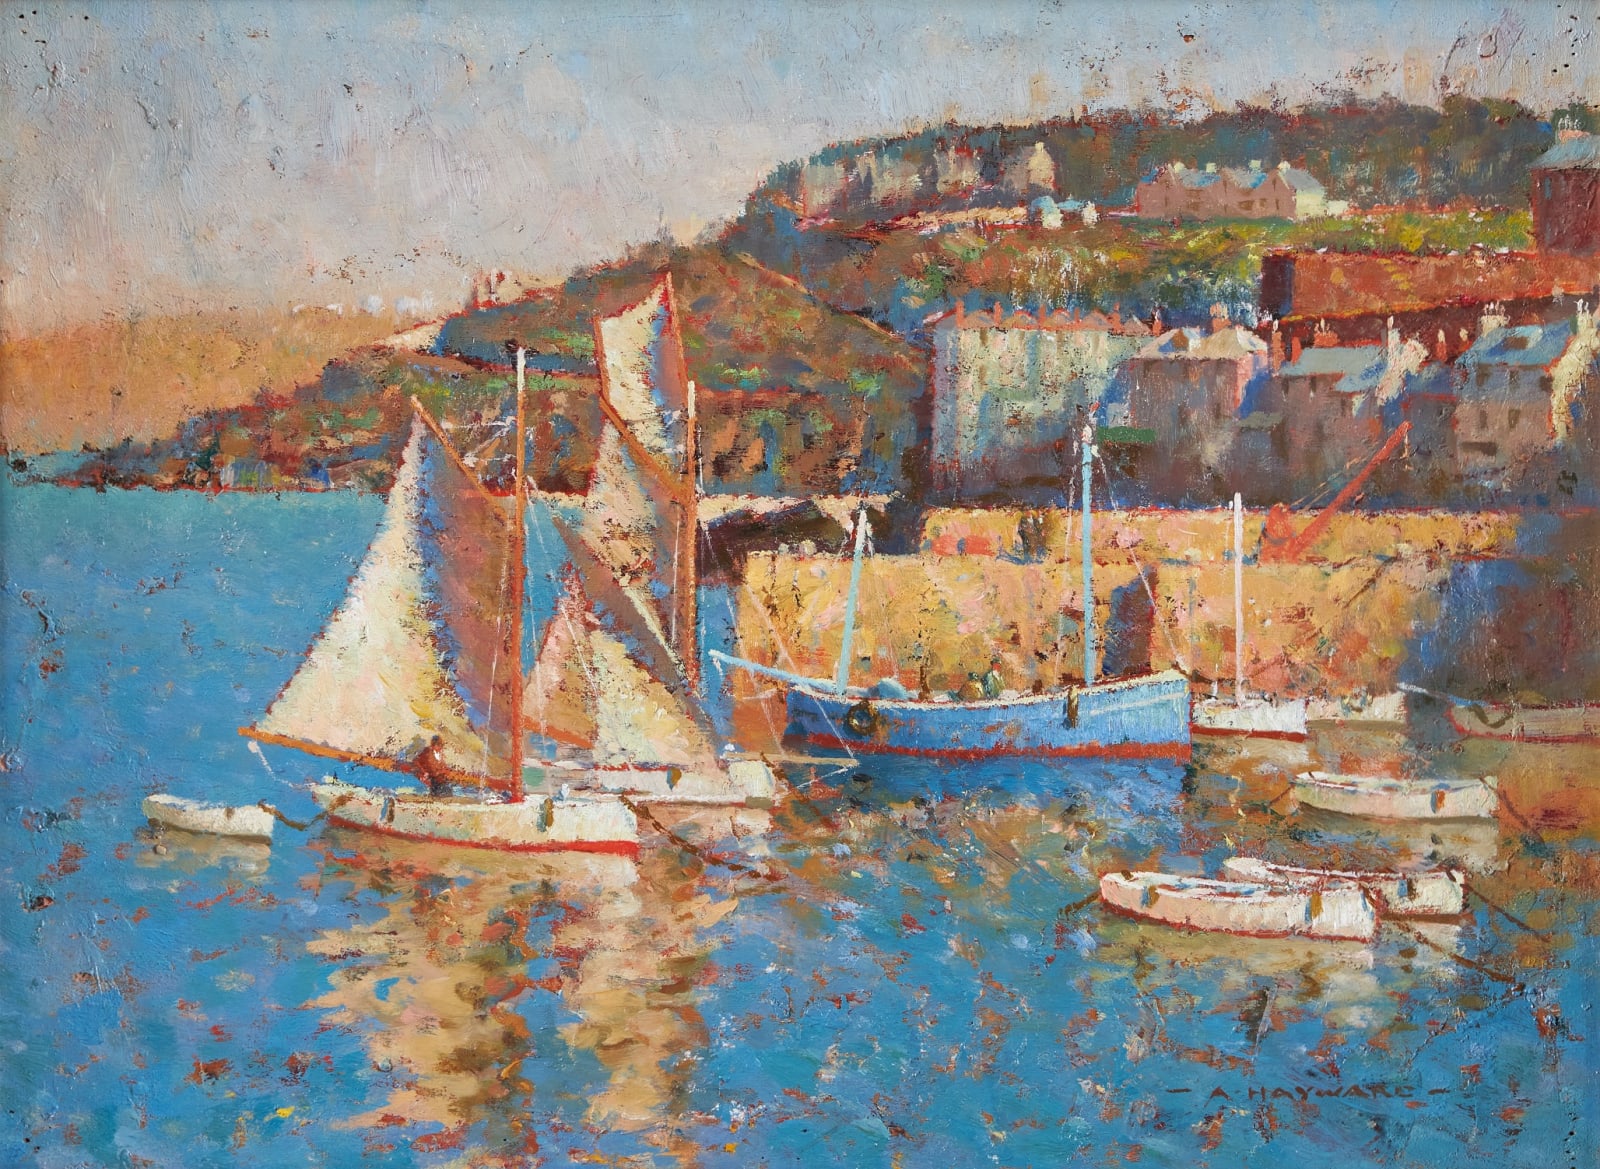 Arthur Hayward, Fishing boats, St Ives | Rountree Tryon